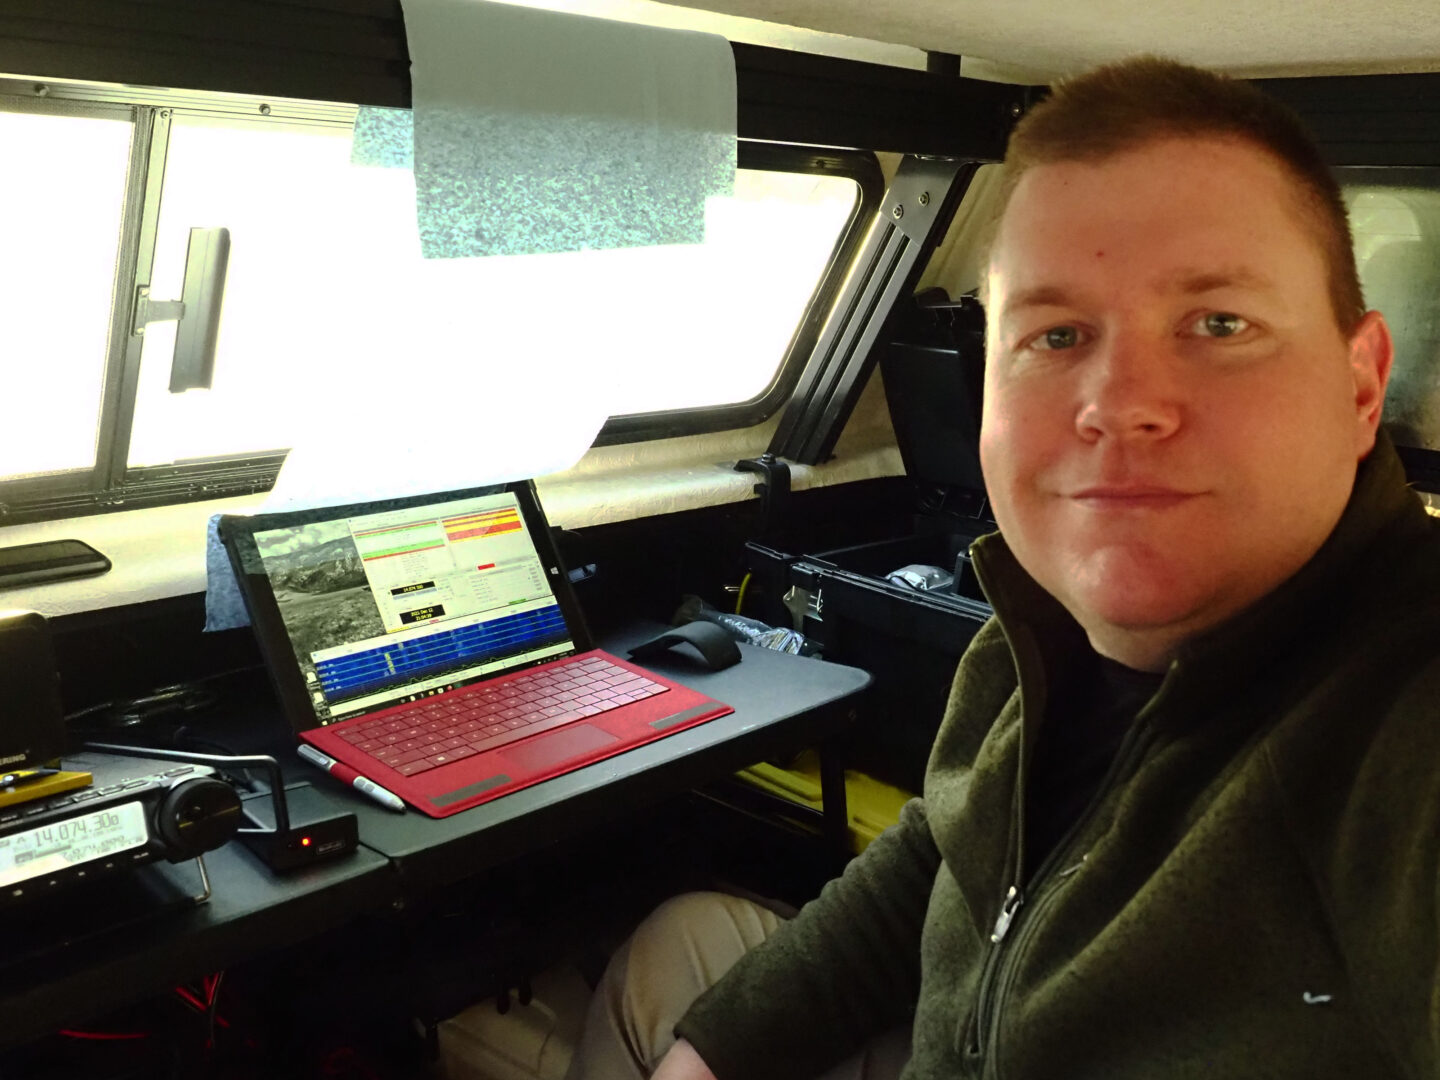 Ham radi ooperator Brandon Clark, KL7BSC, operating portable